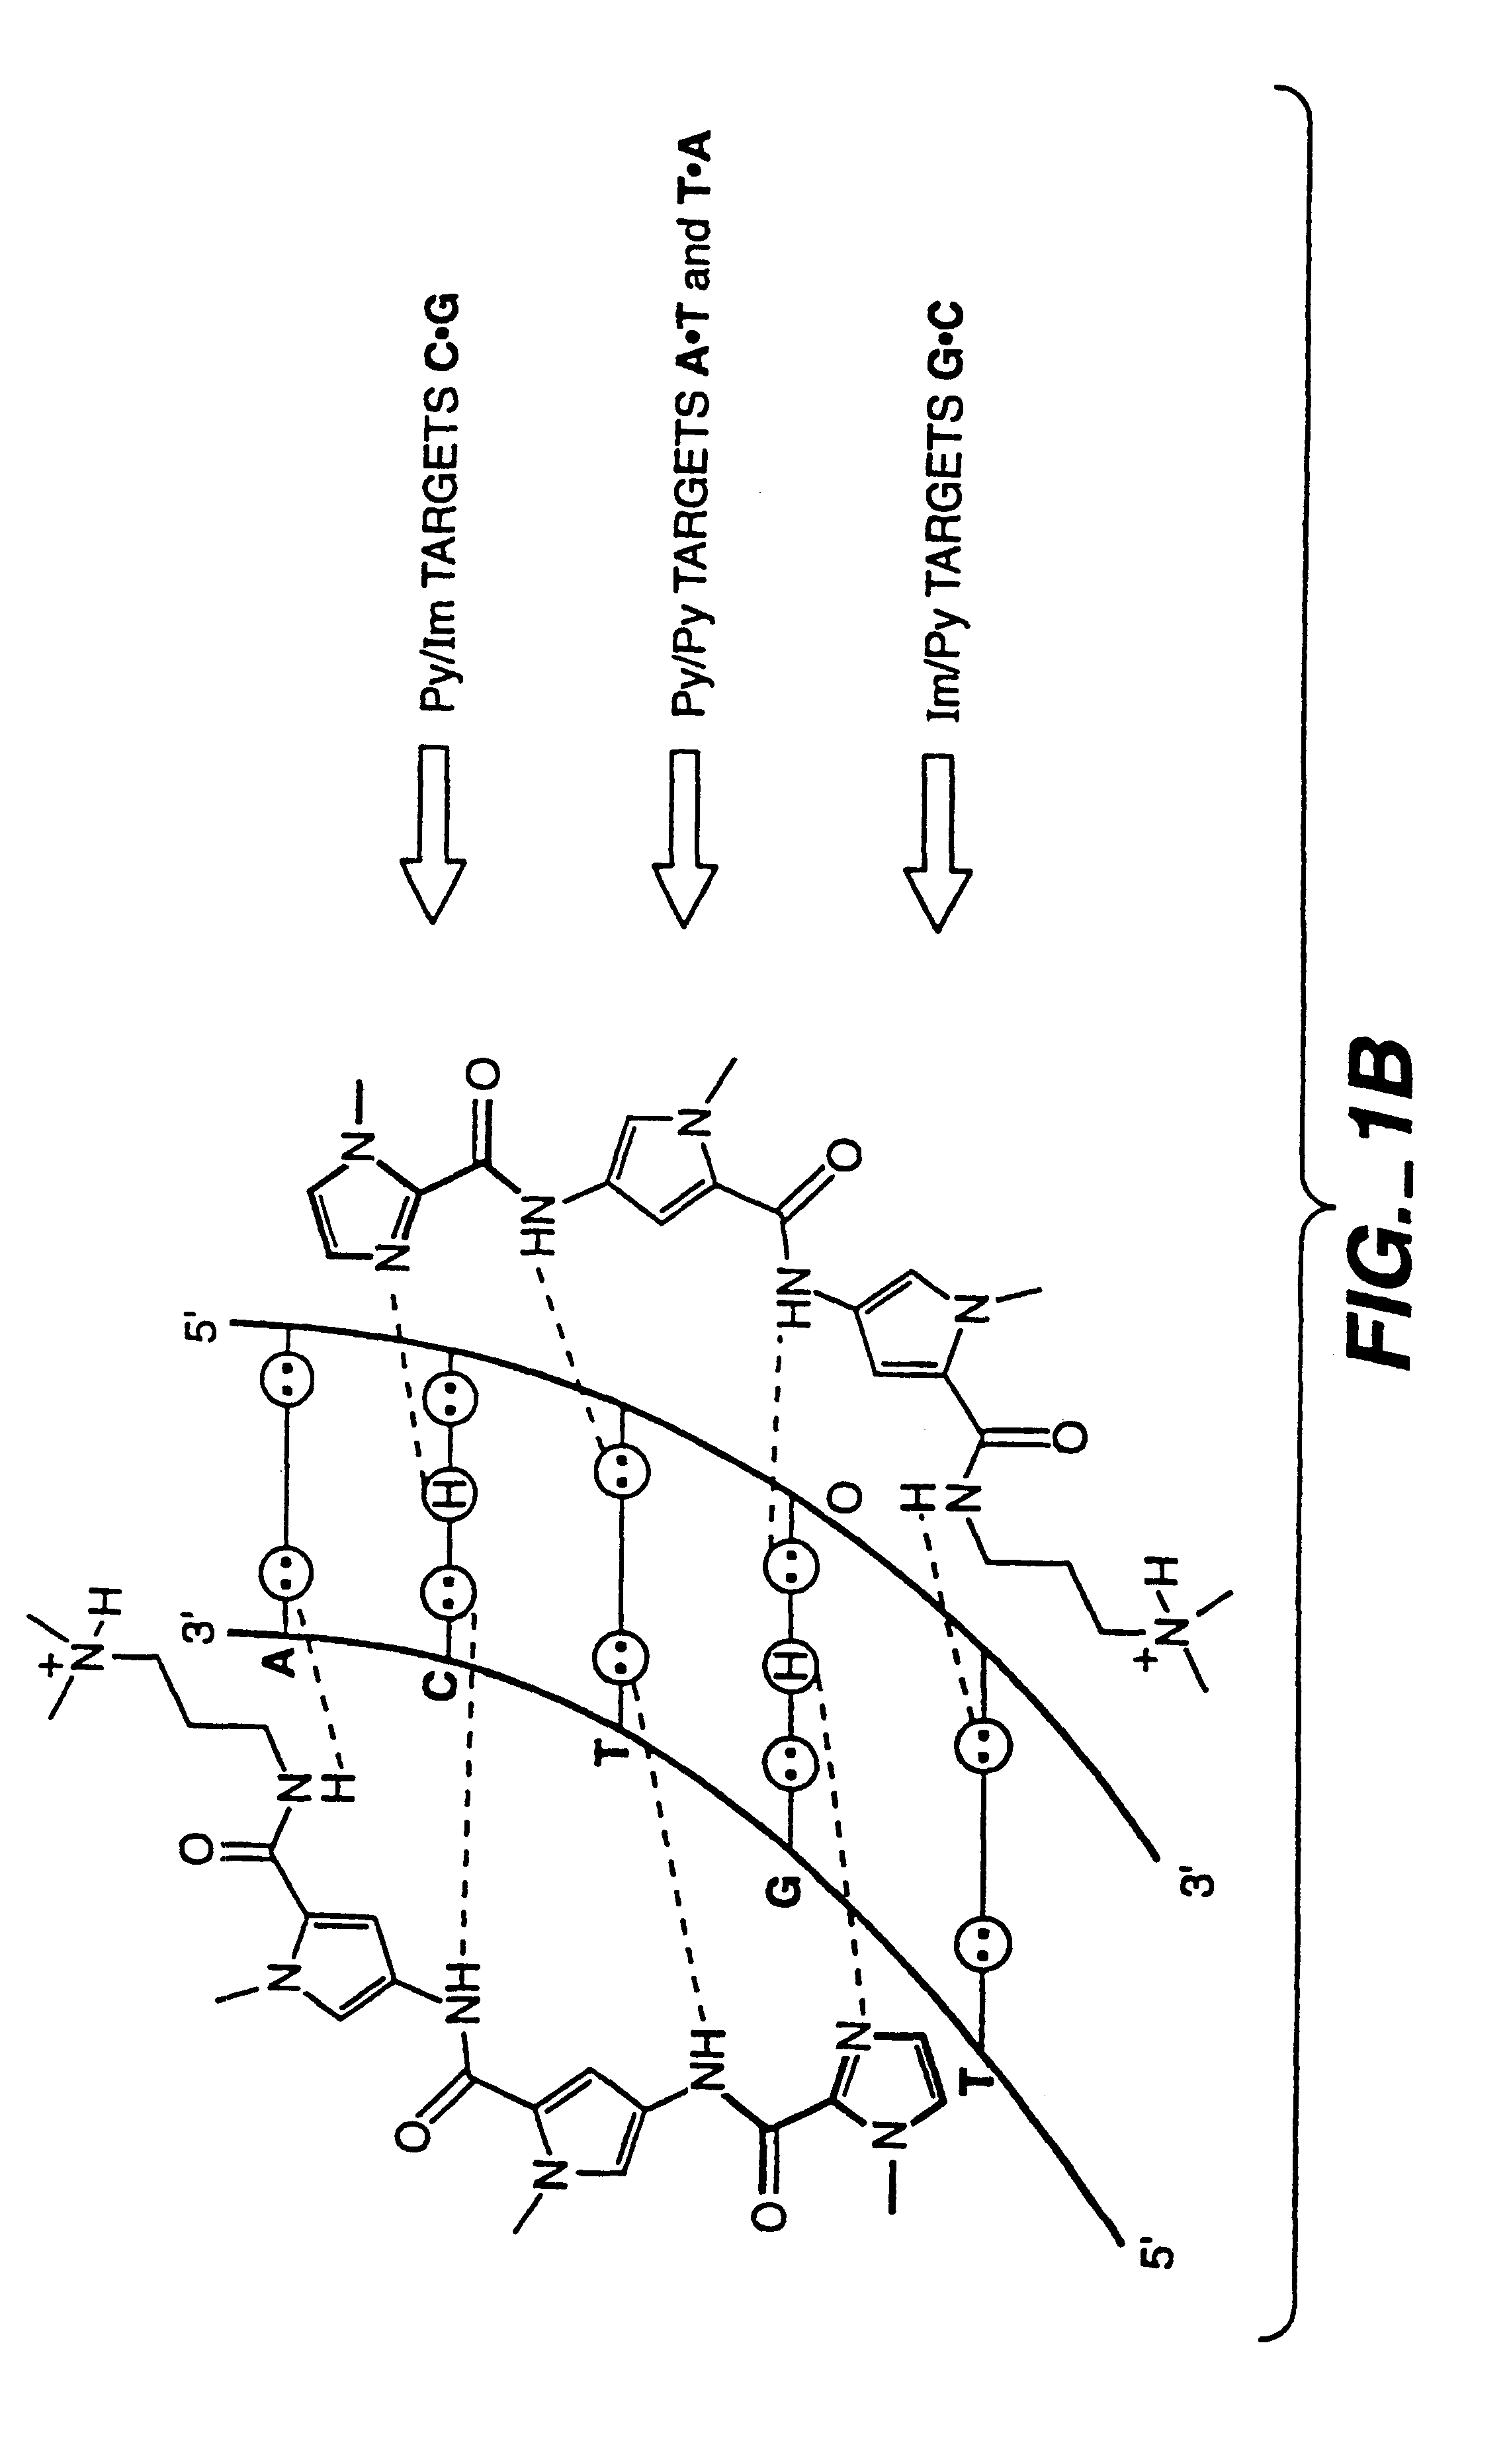 Complex formation between dsDNA and oligomer of cyclic heterocycles